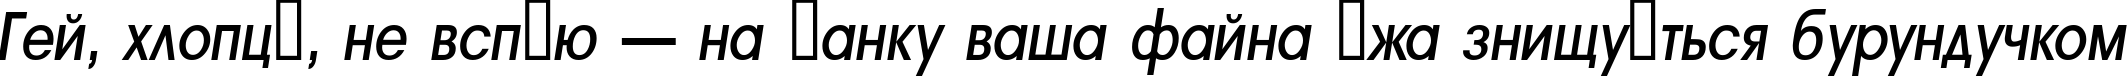 Пример написания шрифтом a_AvanteNrMedium Italic текста на украинском